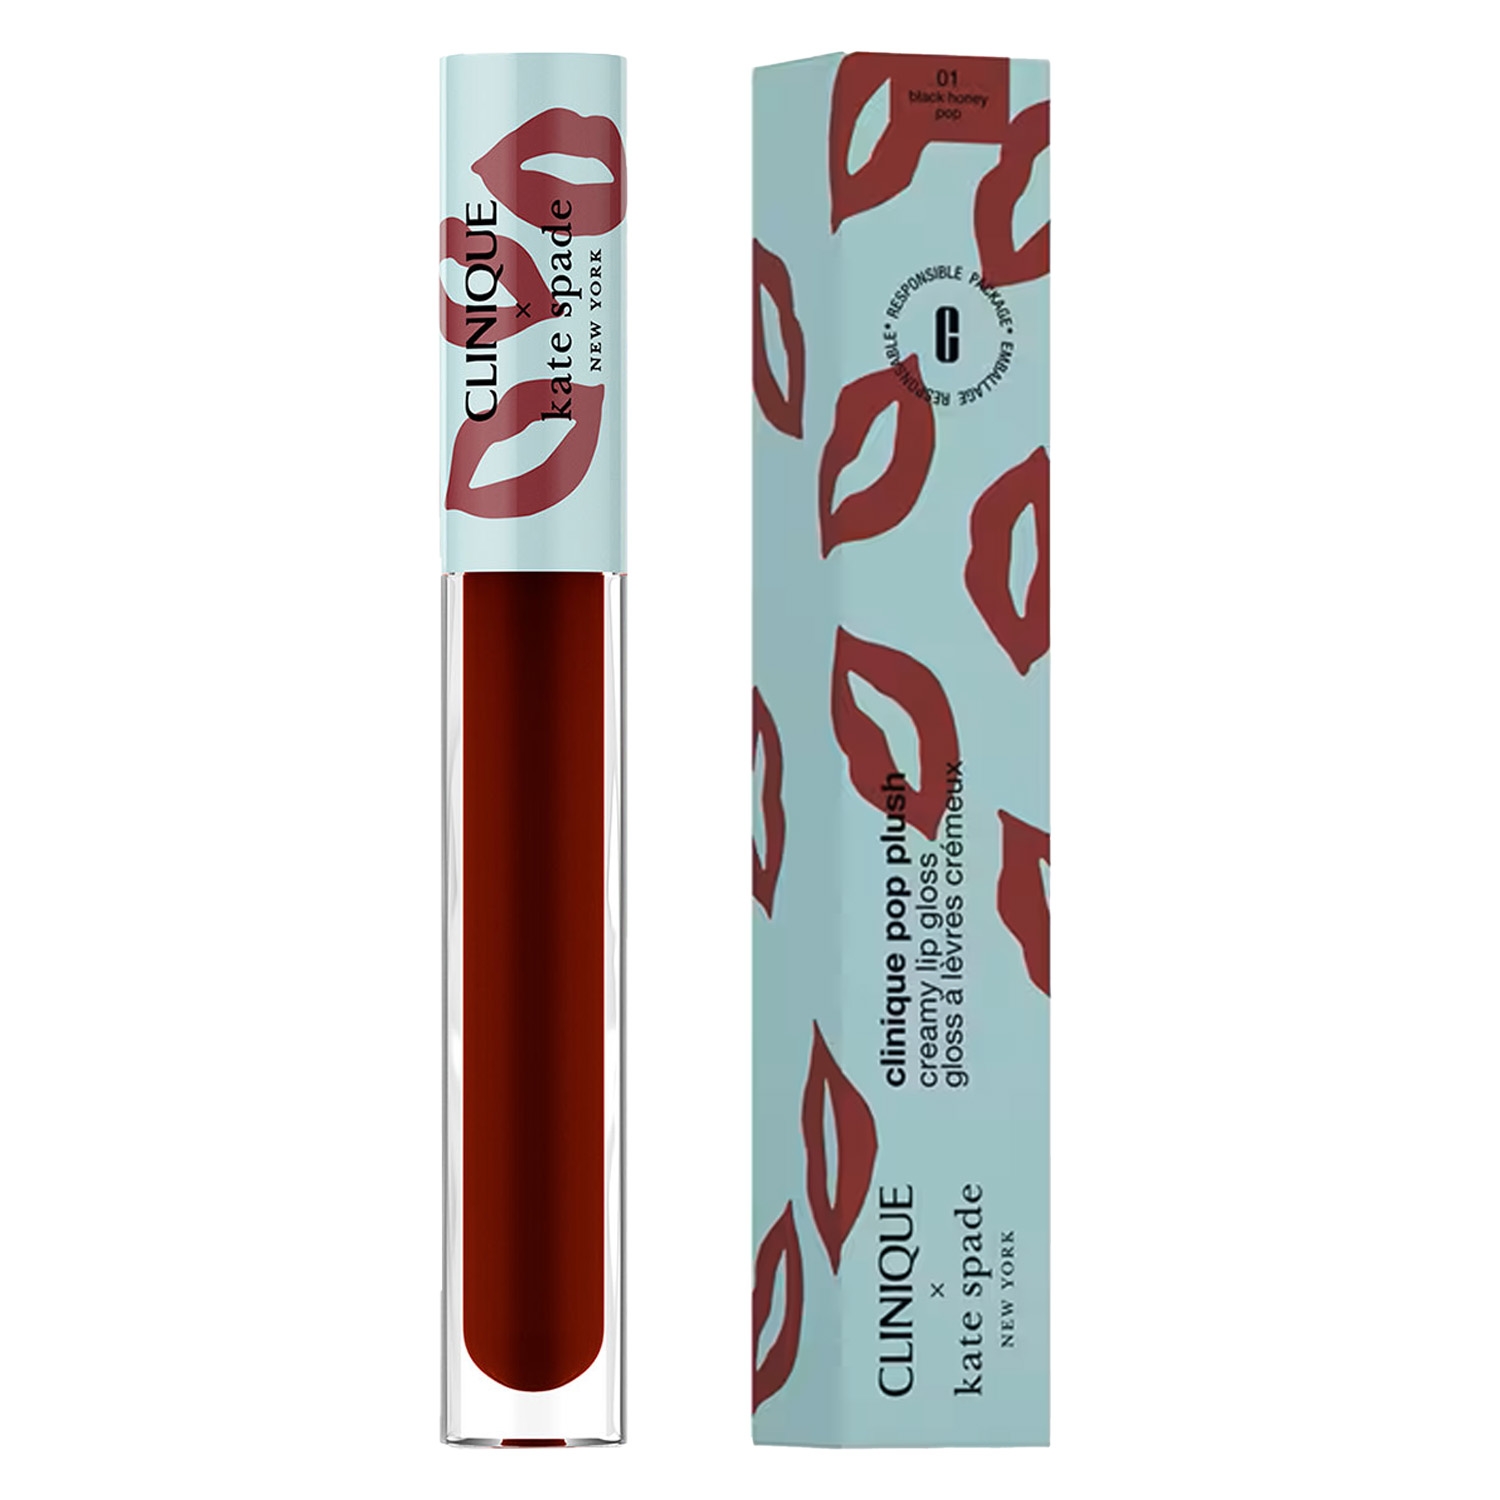 Produktbild von Clinique Lips - Decorated Kate Spade Pop Plush 01 Black Honey Pop